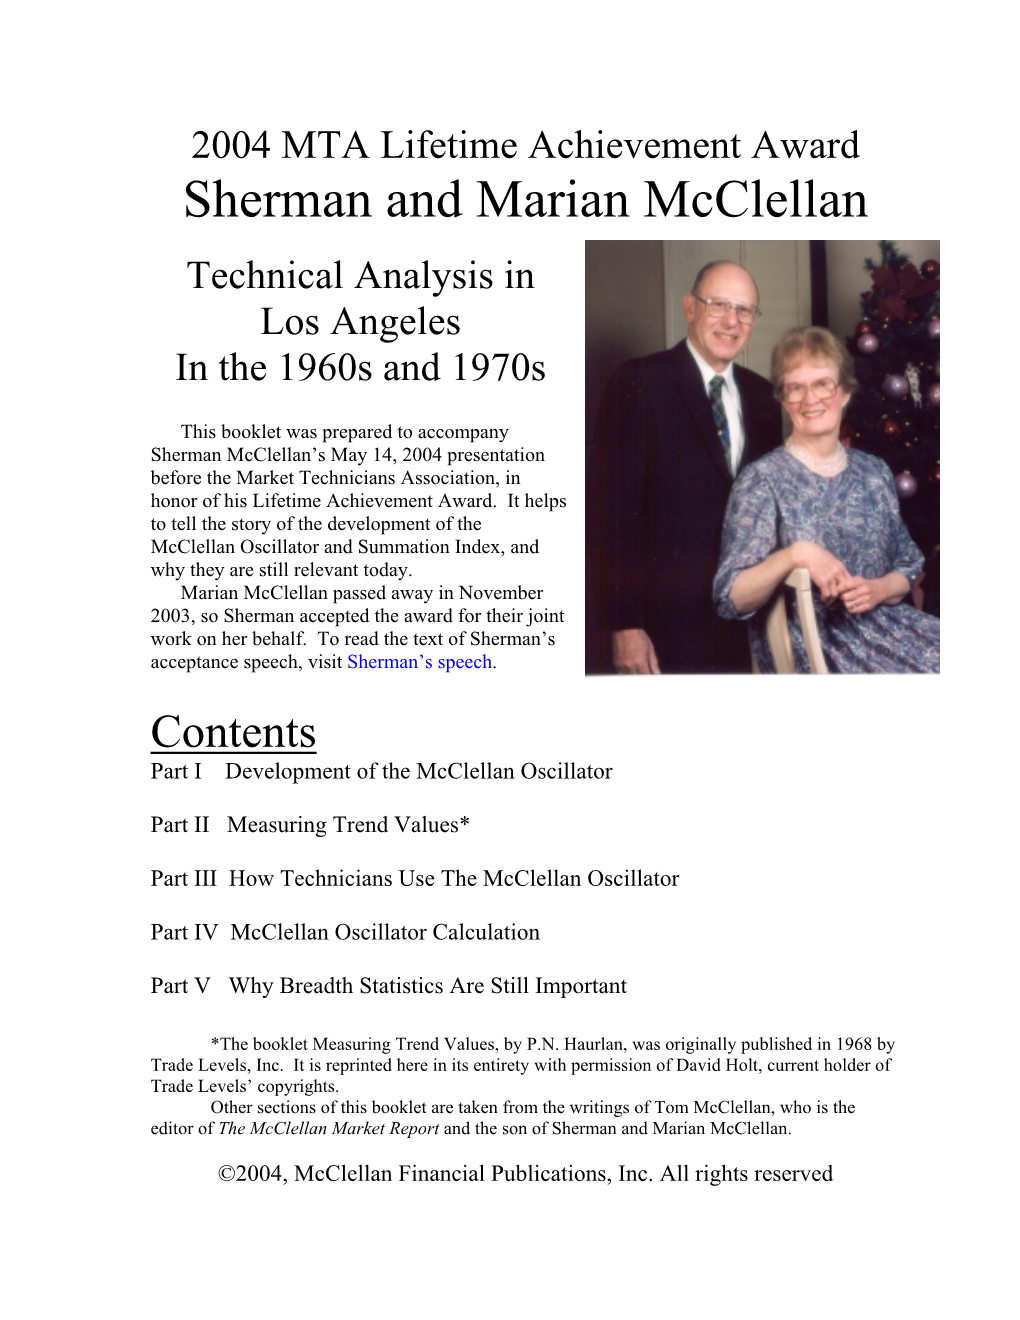 Sherman and Marian Mcclellan